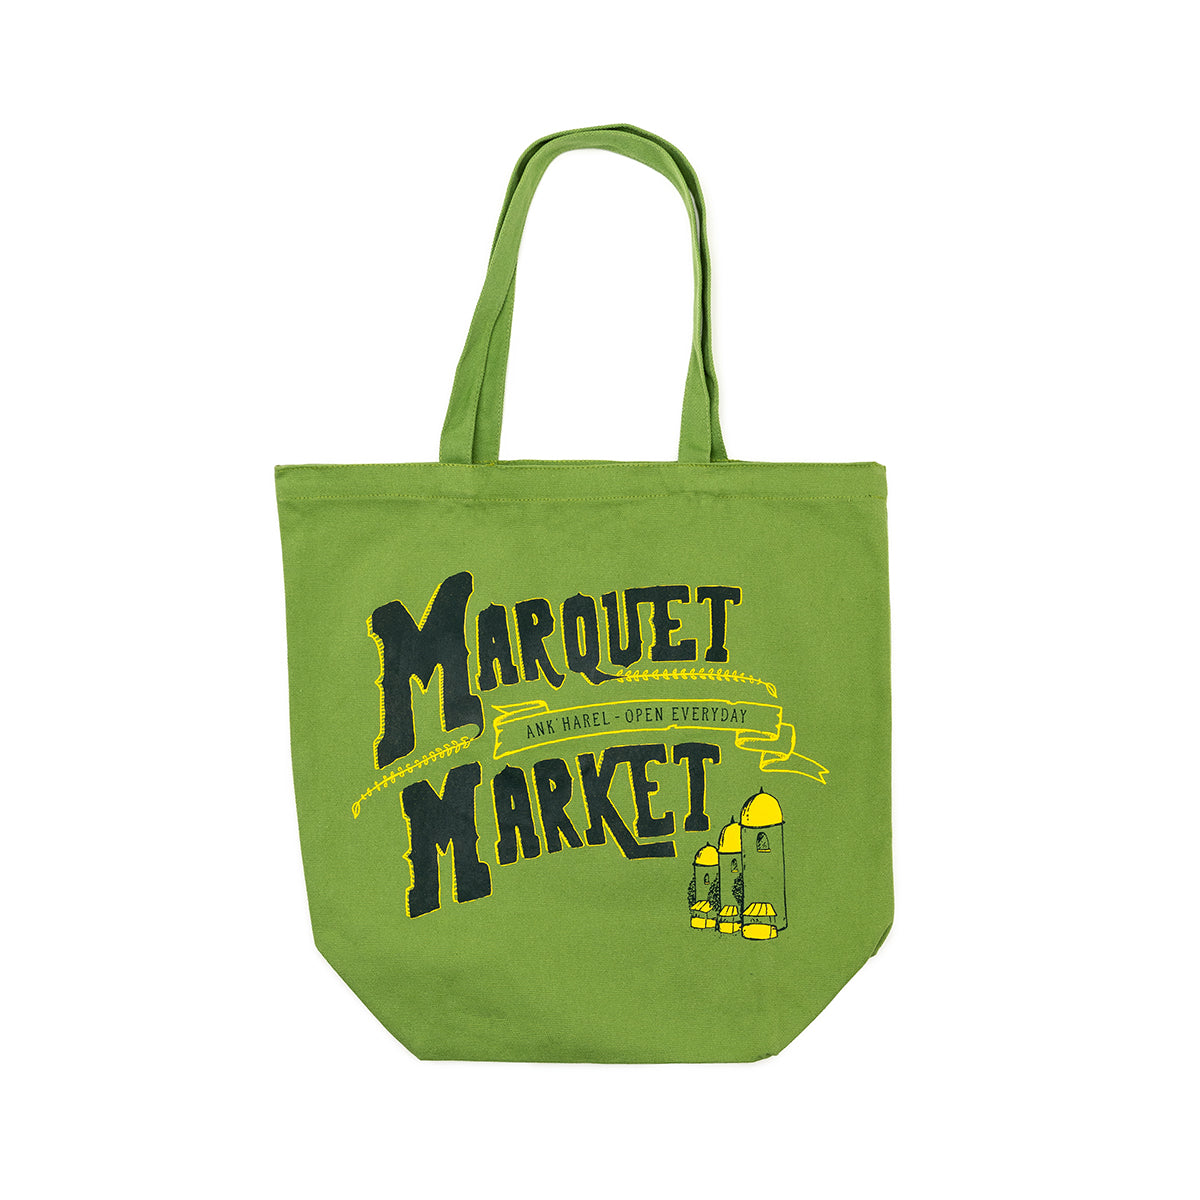 Marquet Market Tote Bag - Green - Critical Role